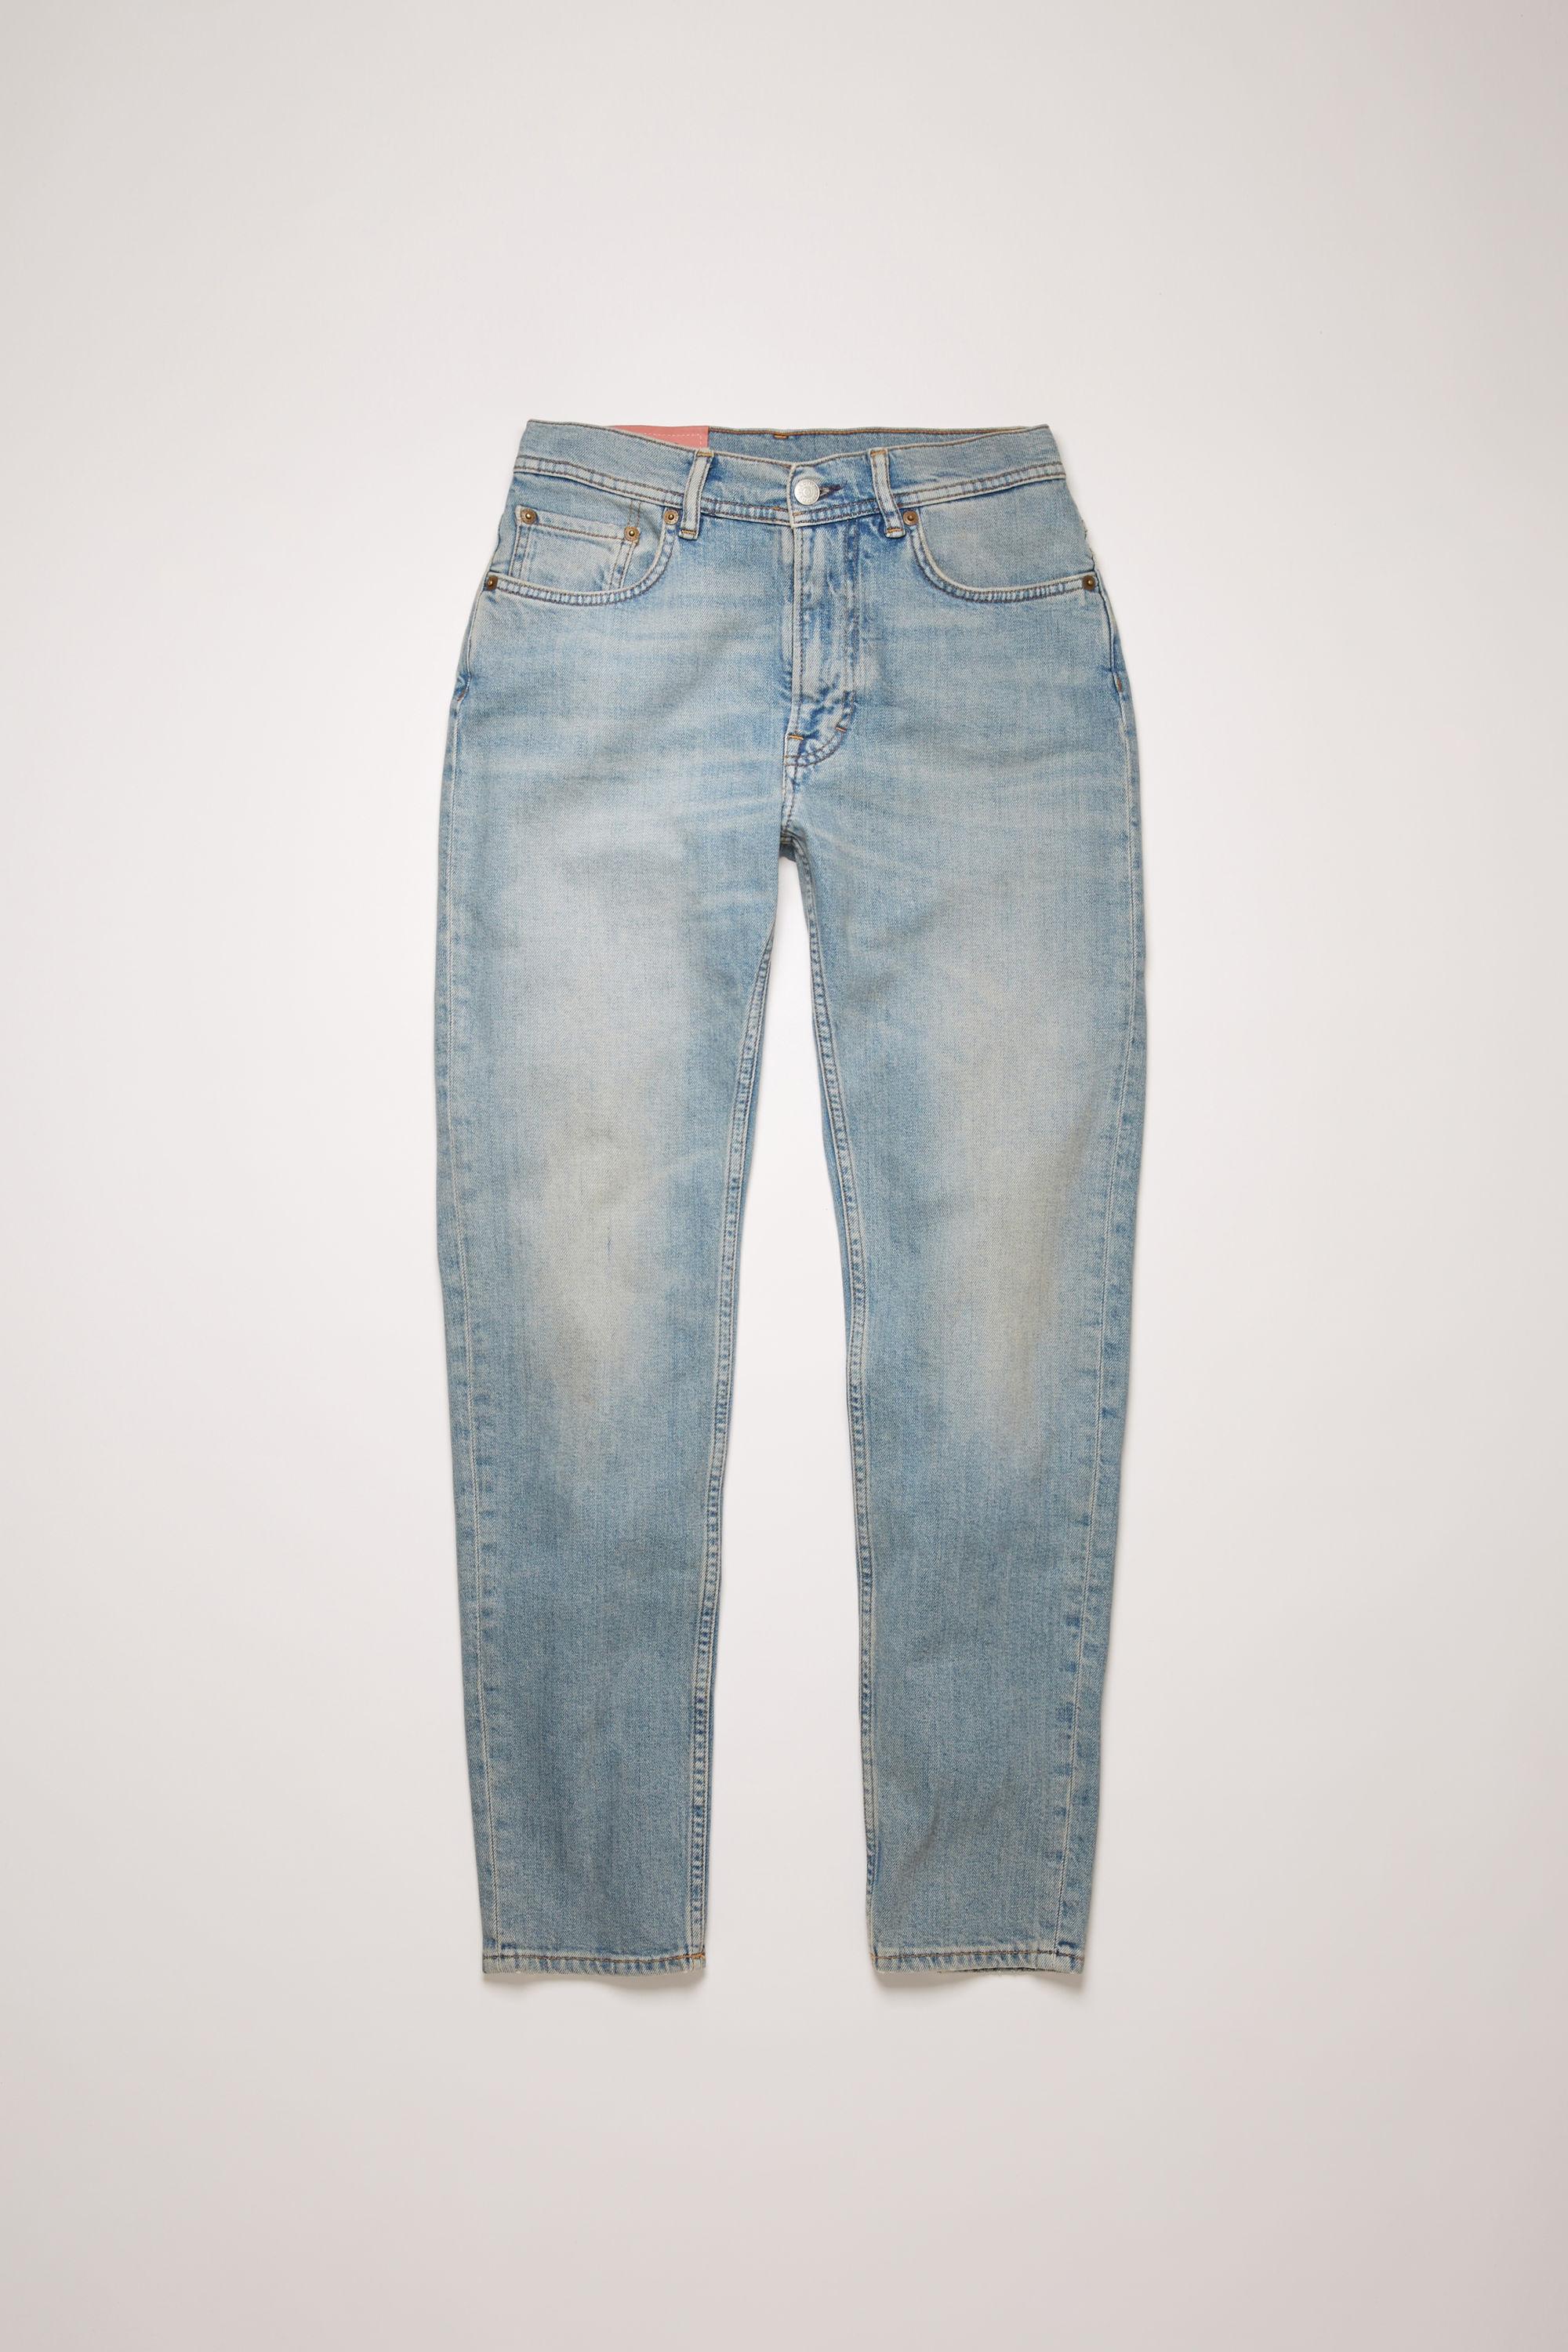 Acne Studios Melk Lt Blue1 Light Blue Slim Tapered Fit Jeans | Lyst